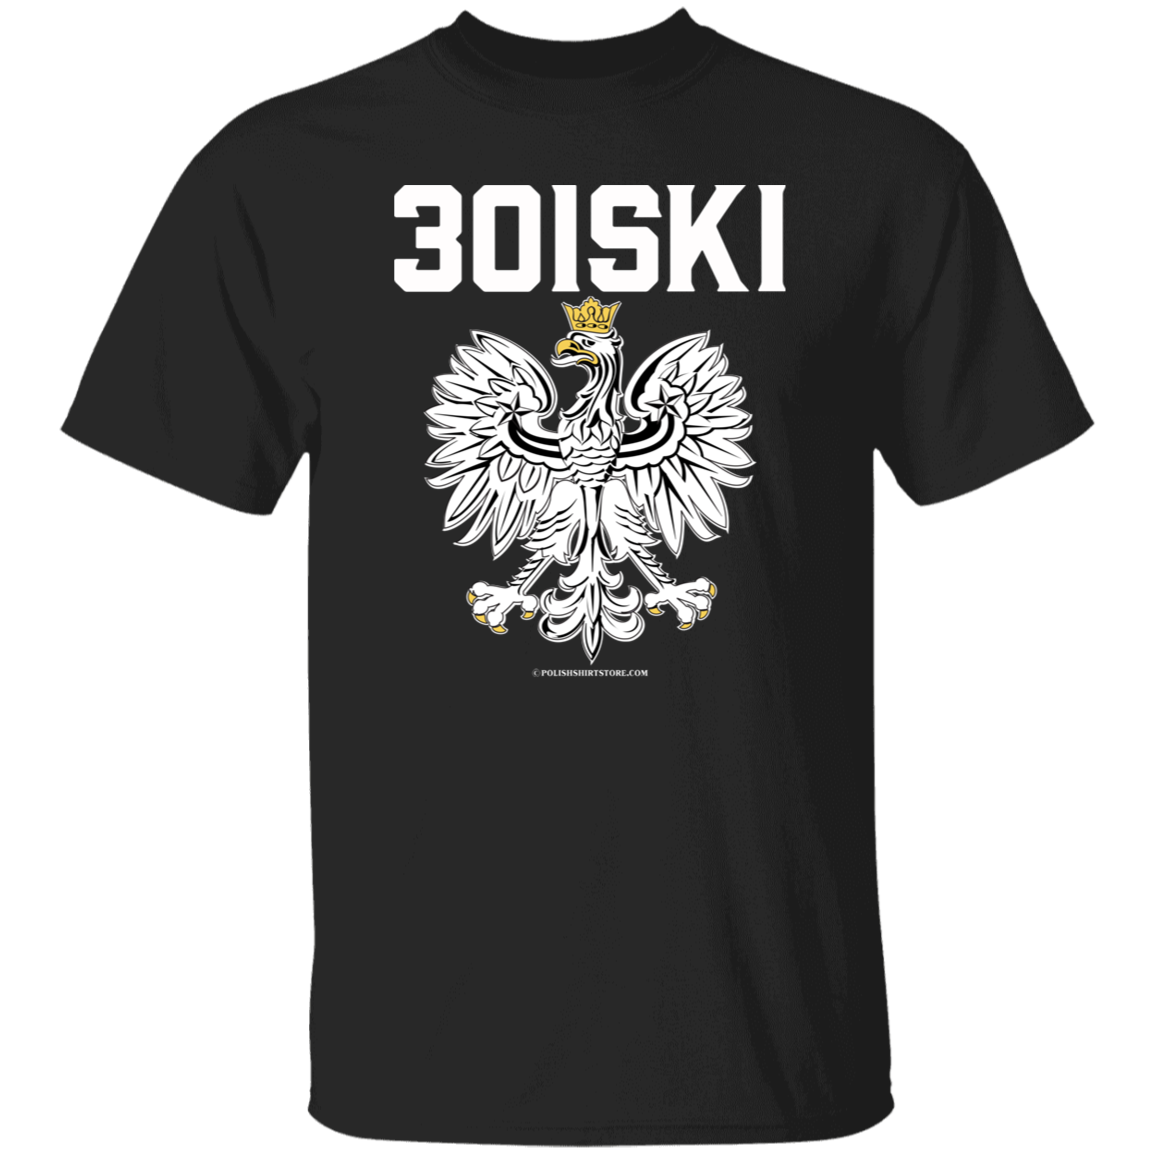 301SKI Apparel CustomCat G500 5.3 oz. T-Shirt Black S